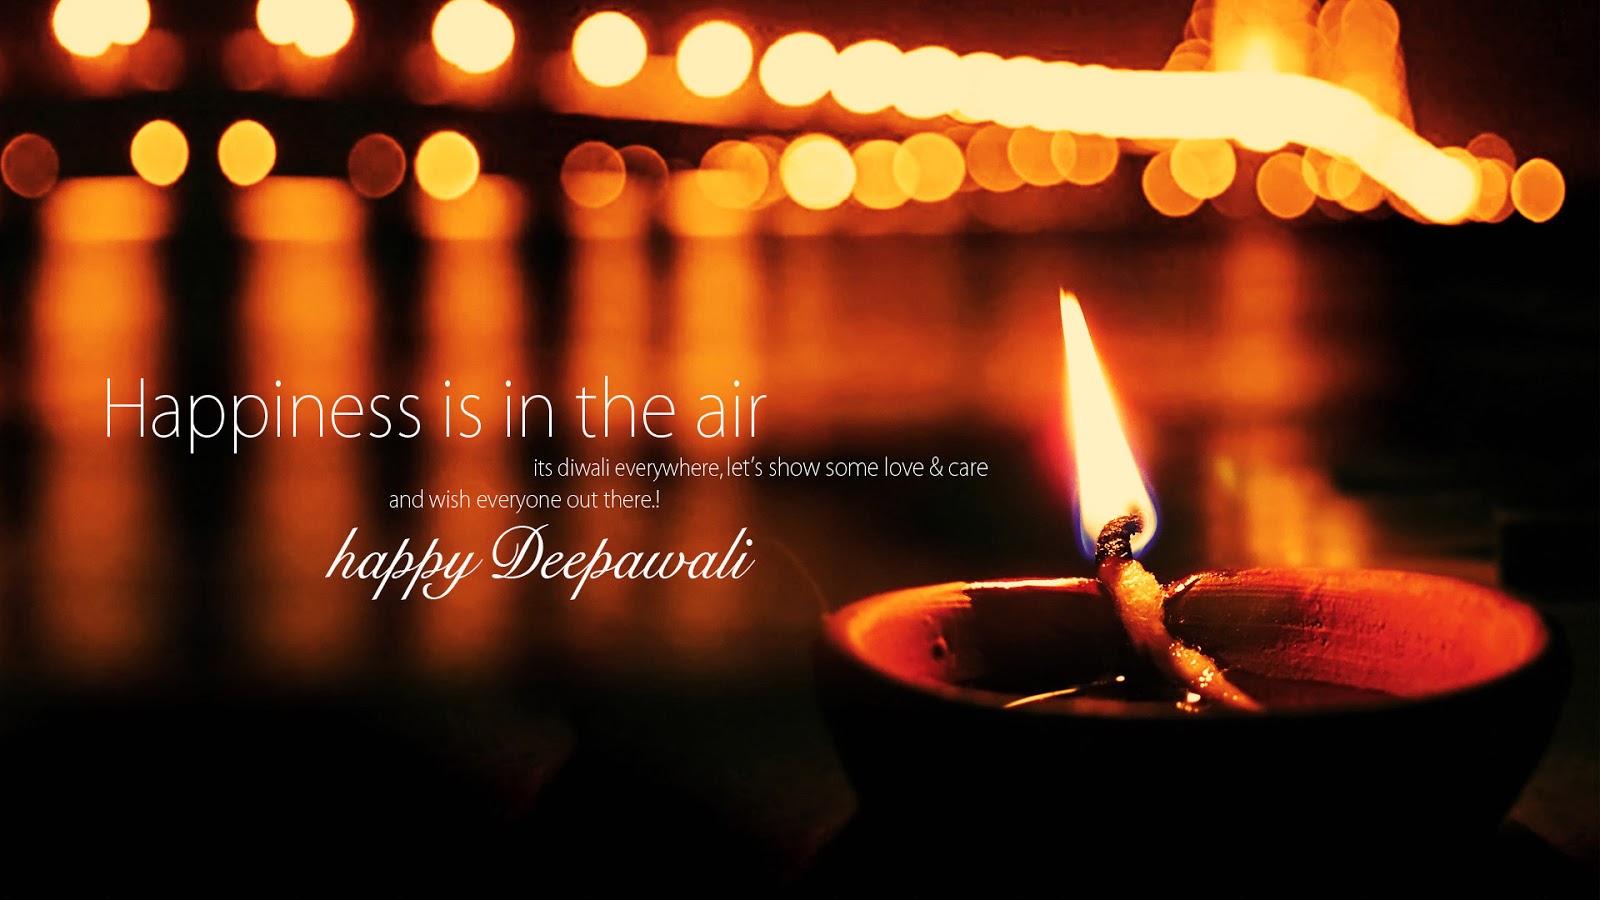 Happy Diwali!!!!!!!!!